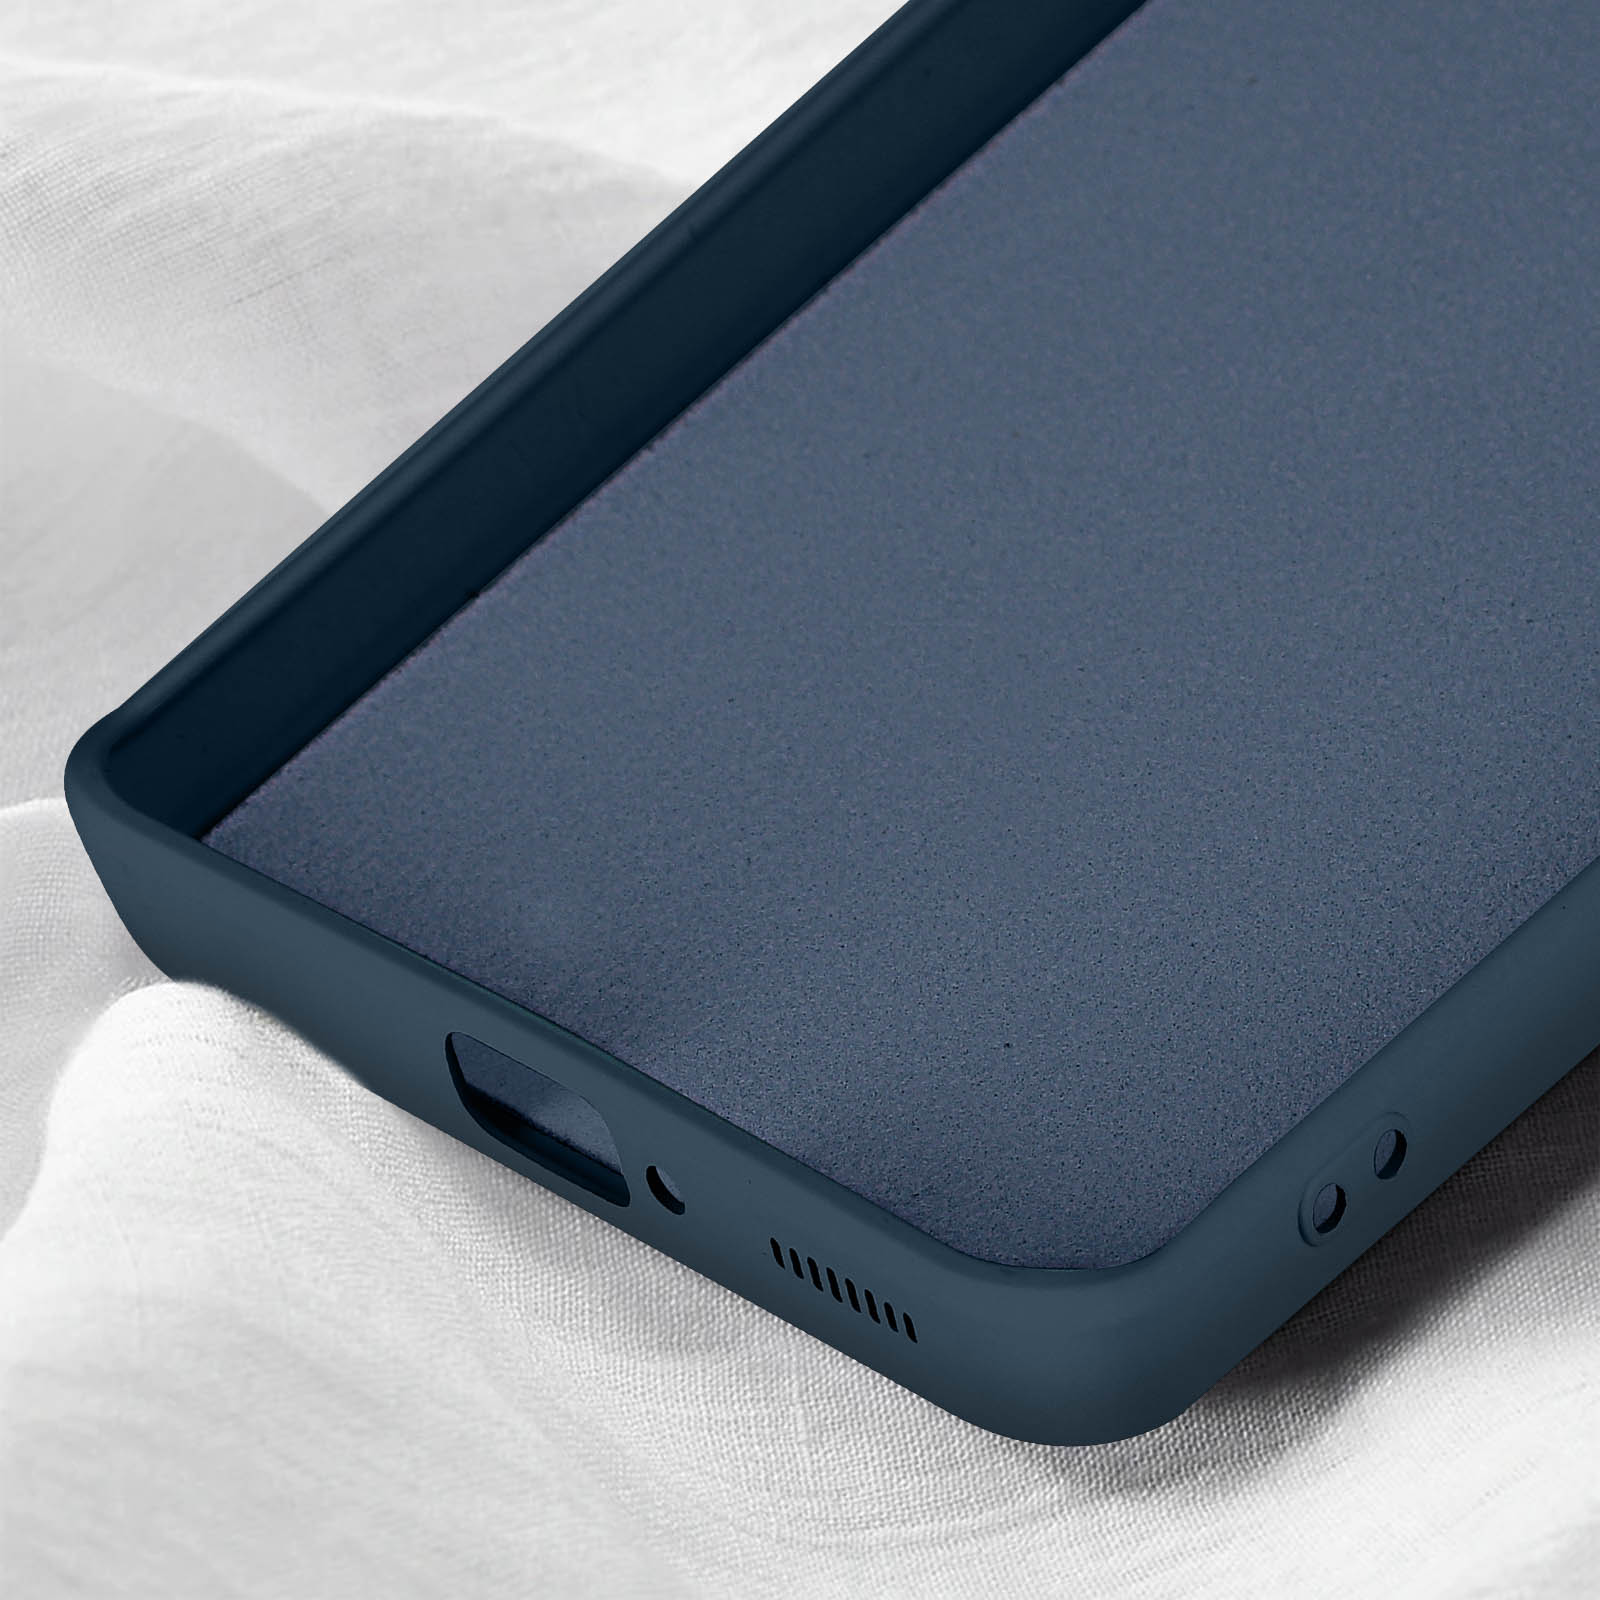 AVIZAR Colorful Xiaomi, Kollektion Backcover, Pro, Blau 13 Series